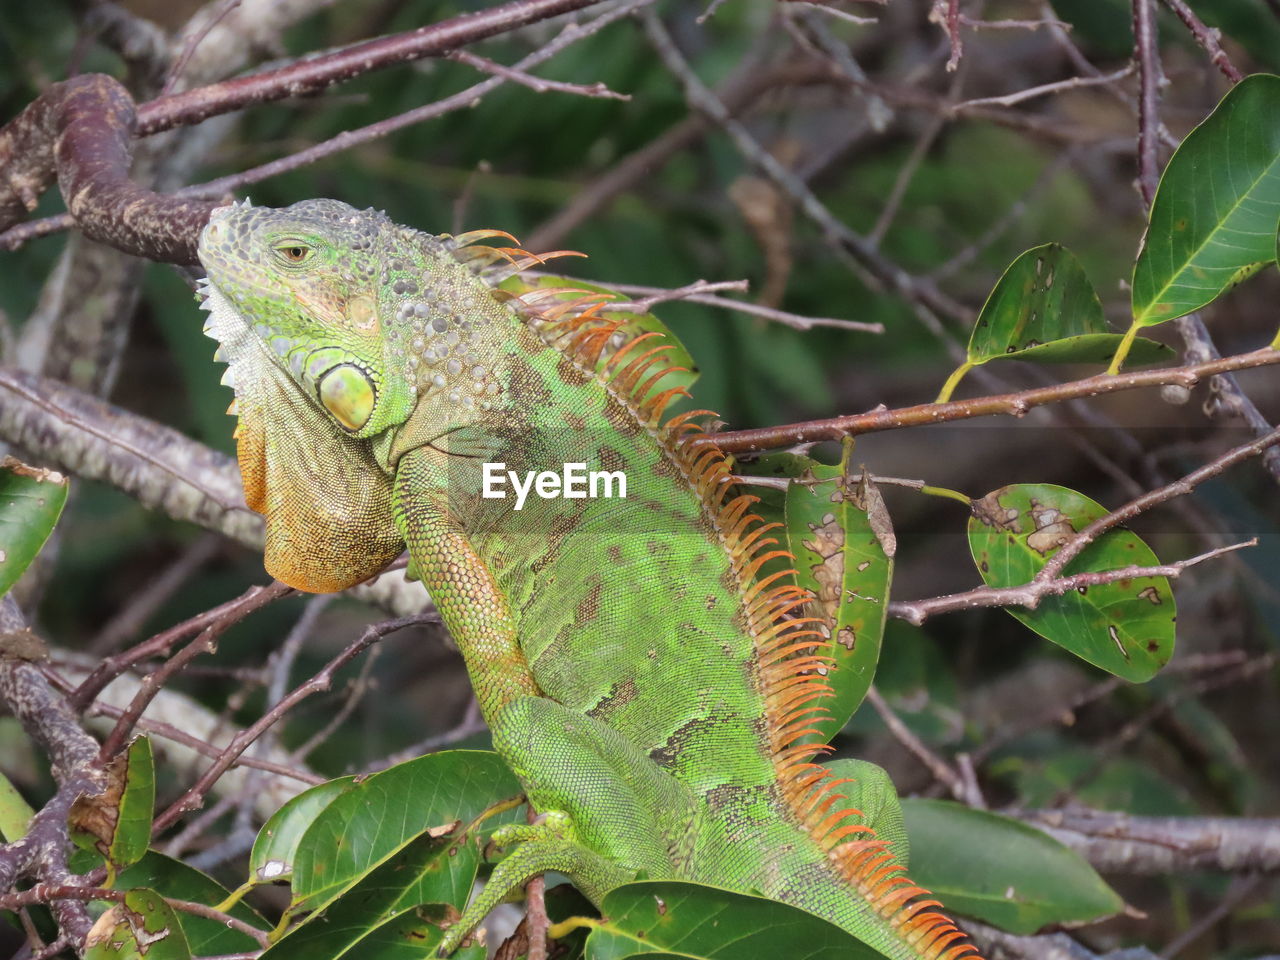 Closeup of an iguana in a tree